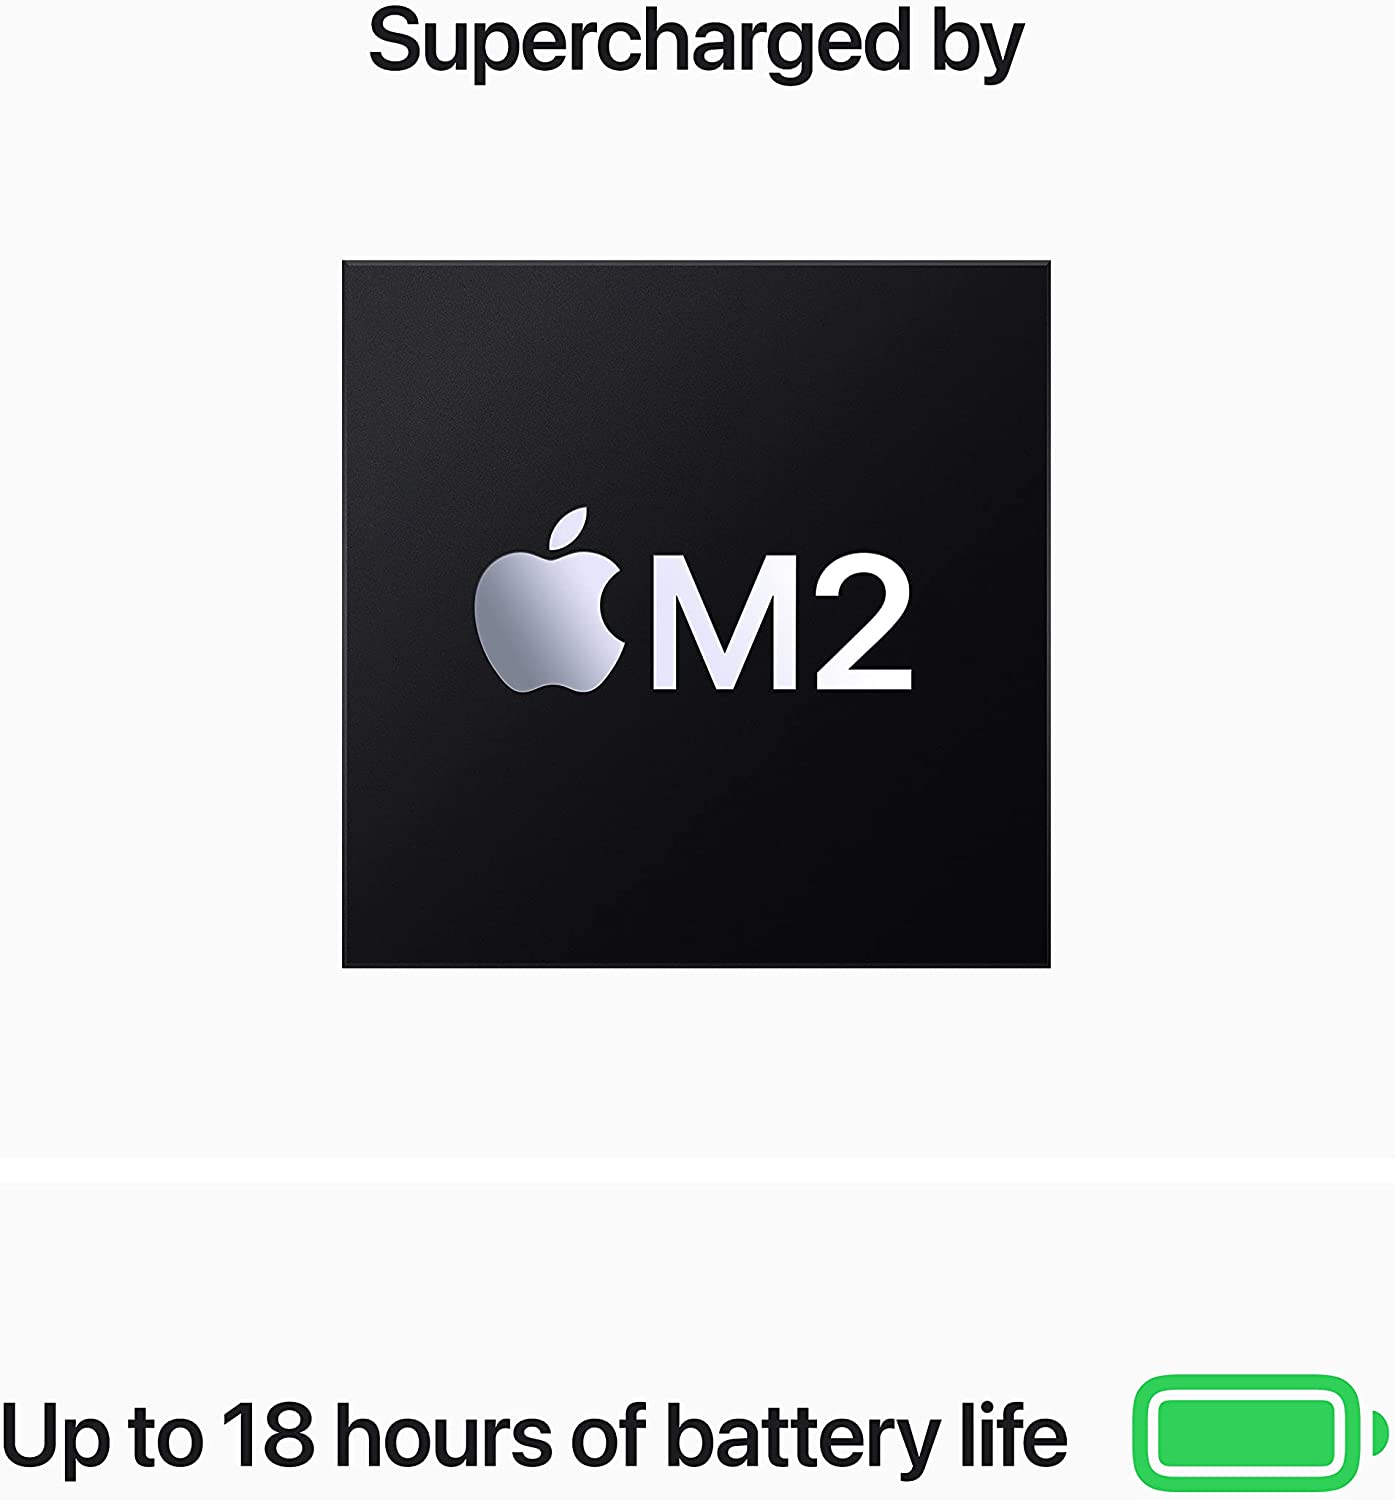 Apple MacBook Air M2 Chip 8-Core GPU, 8GB 256GB SSD, 13.6 Inch, Space Gray